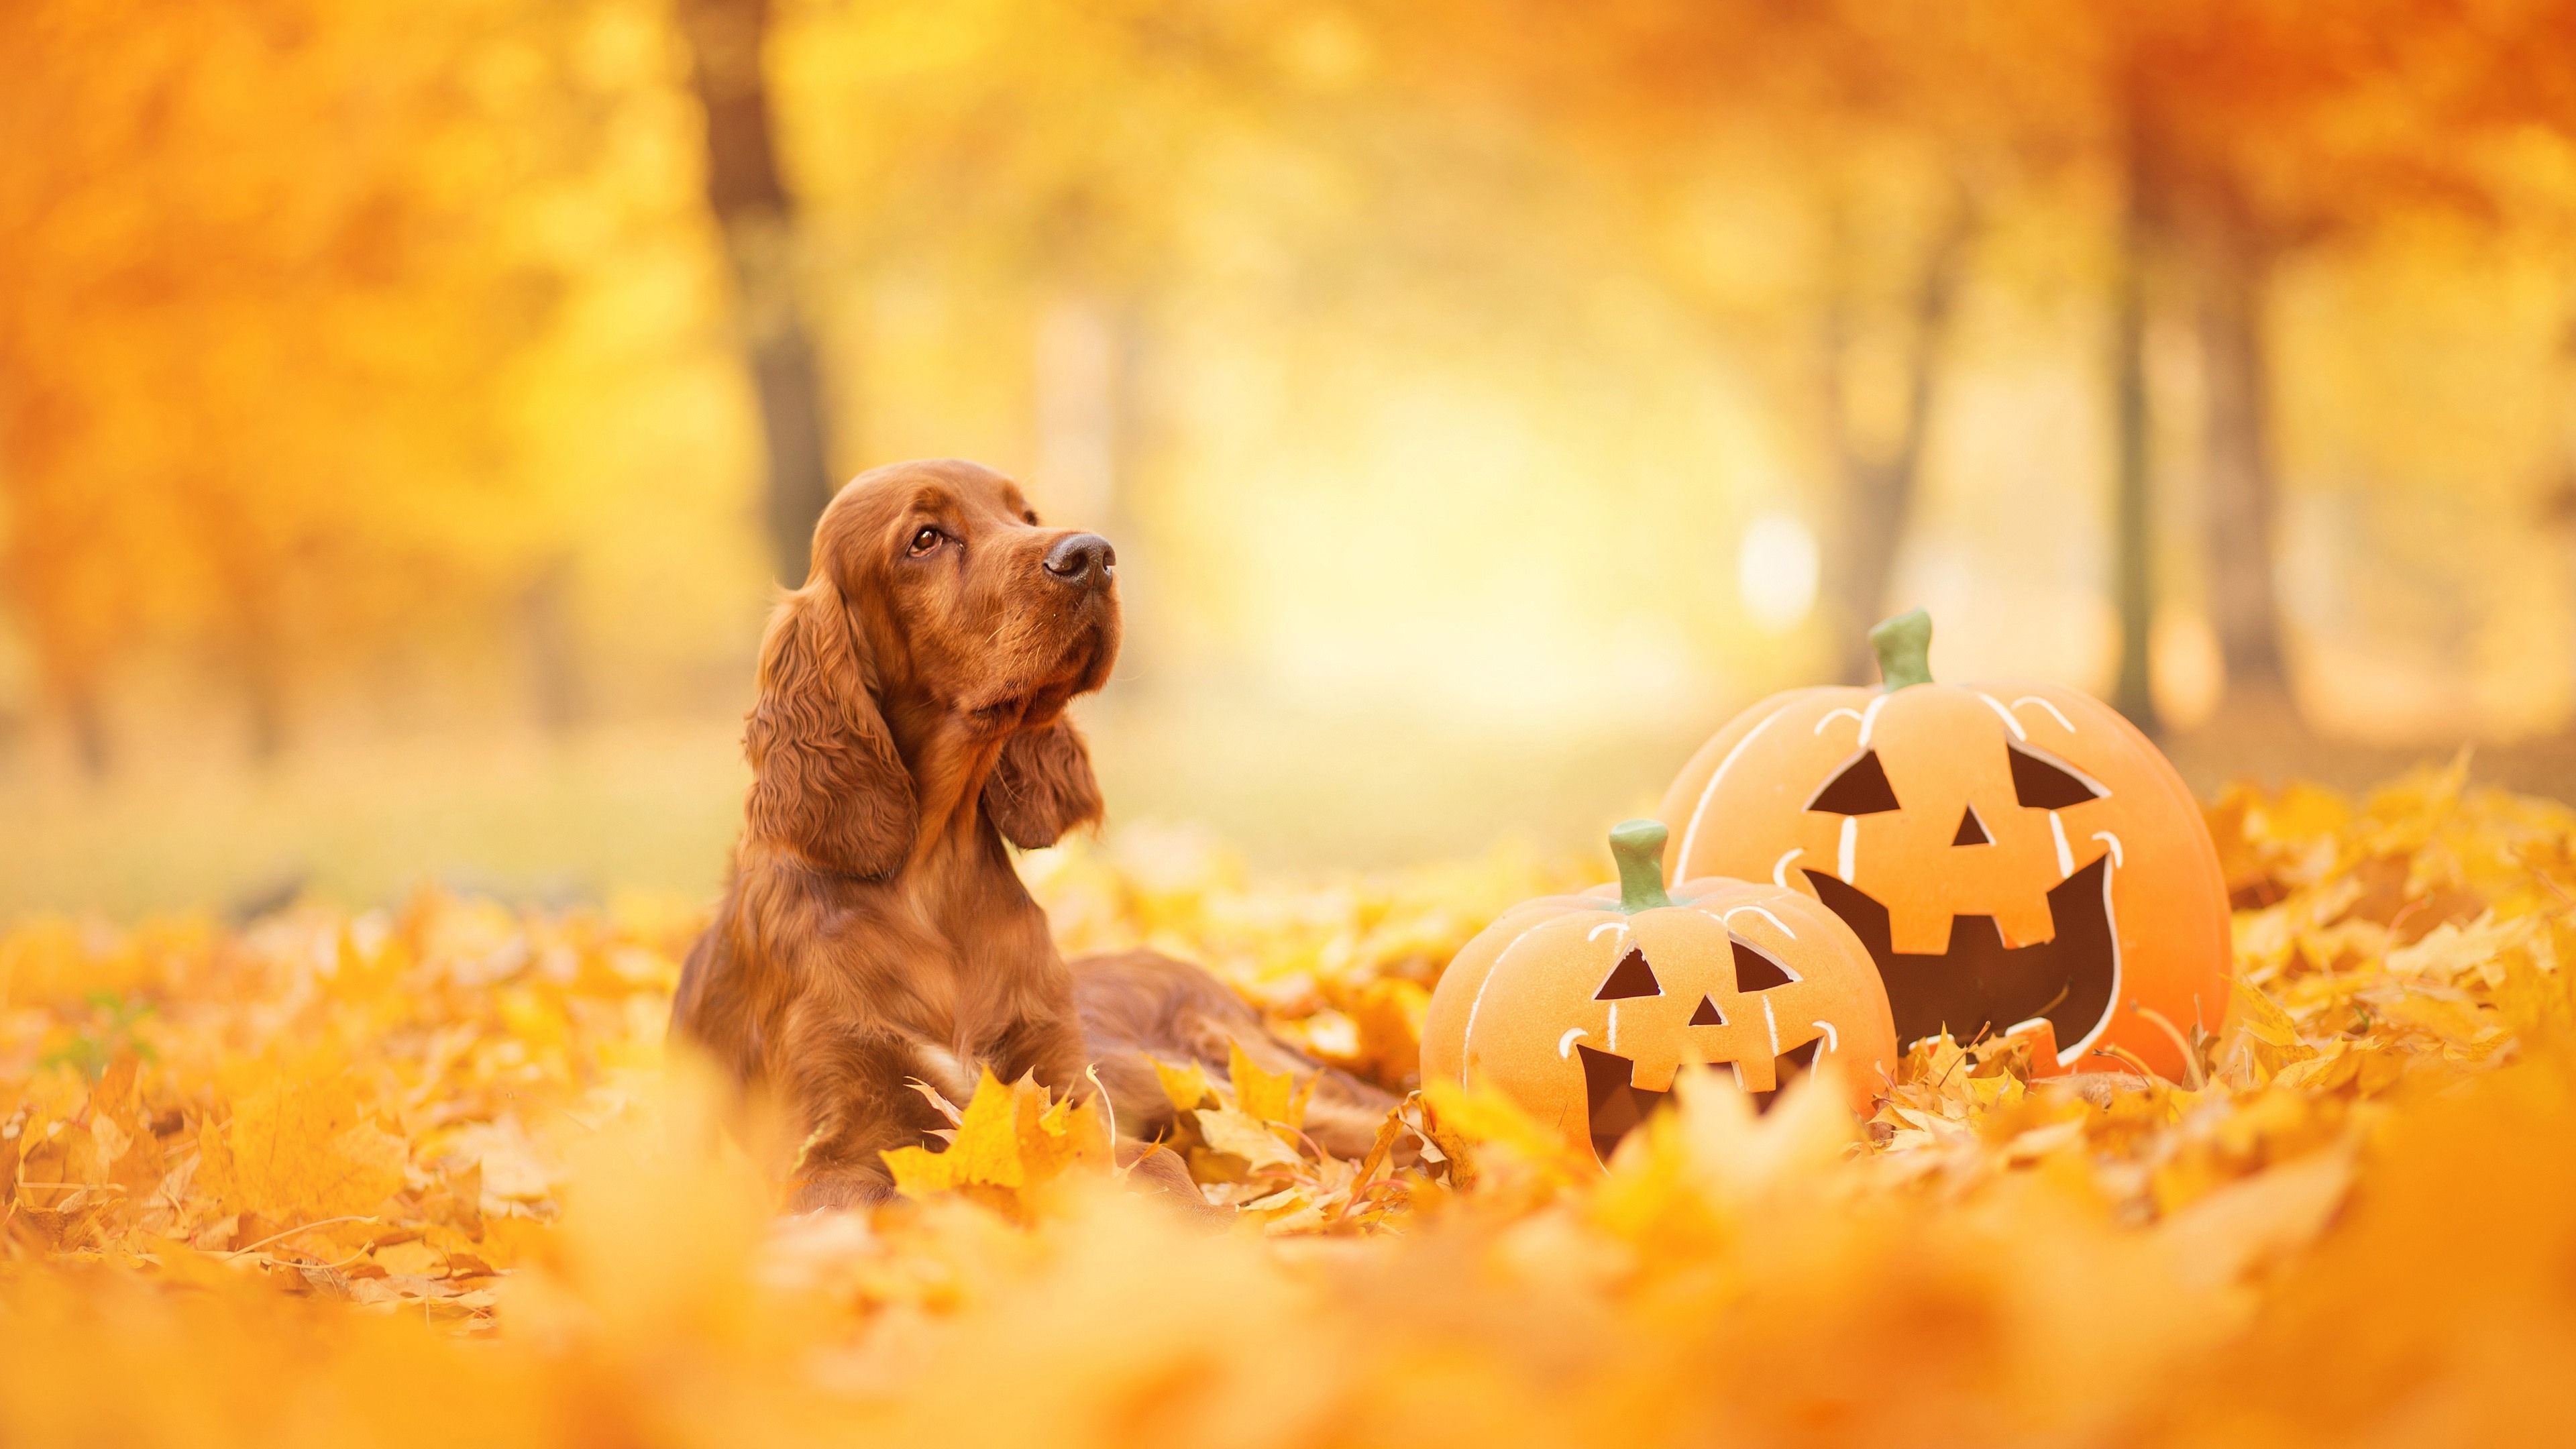 Wallpaper Dog, pumpkin, Halloween, yellow leaves, autumn 3840x2160 UHD 4K Picture, Image